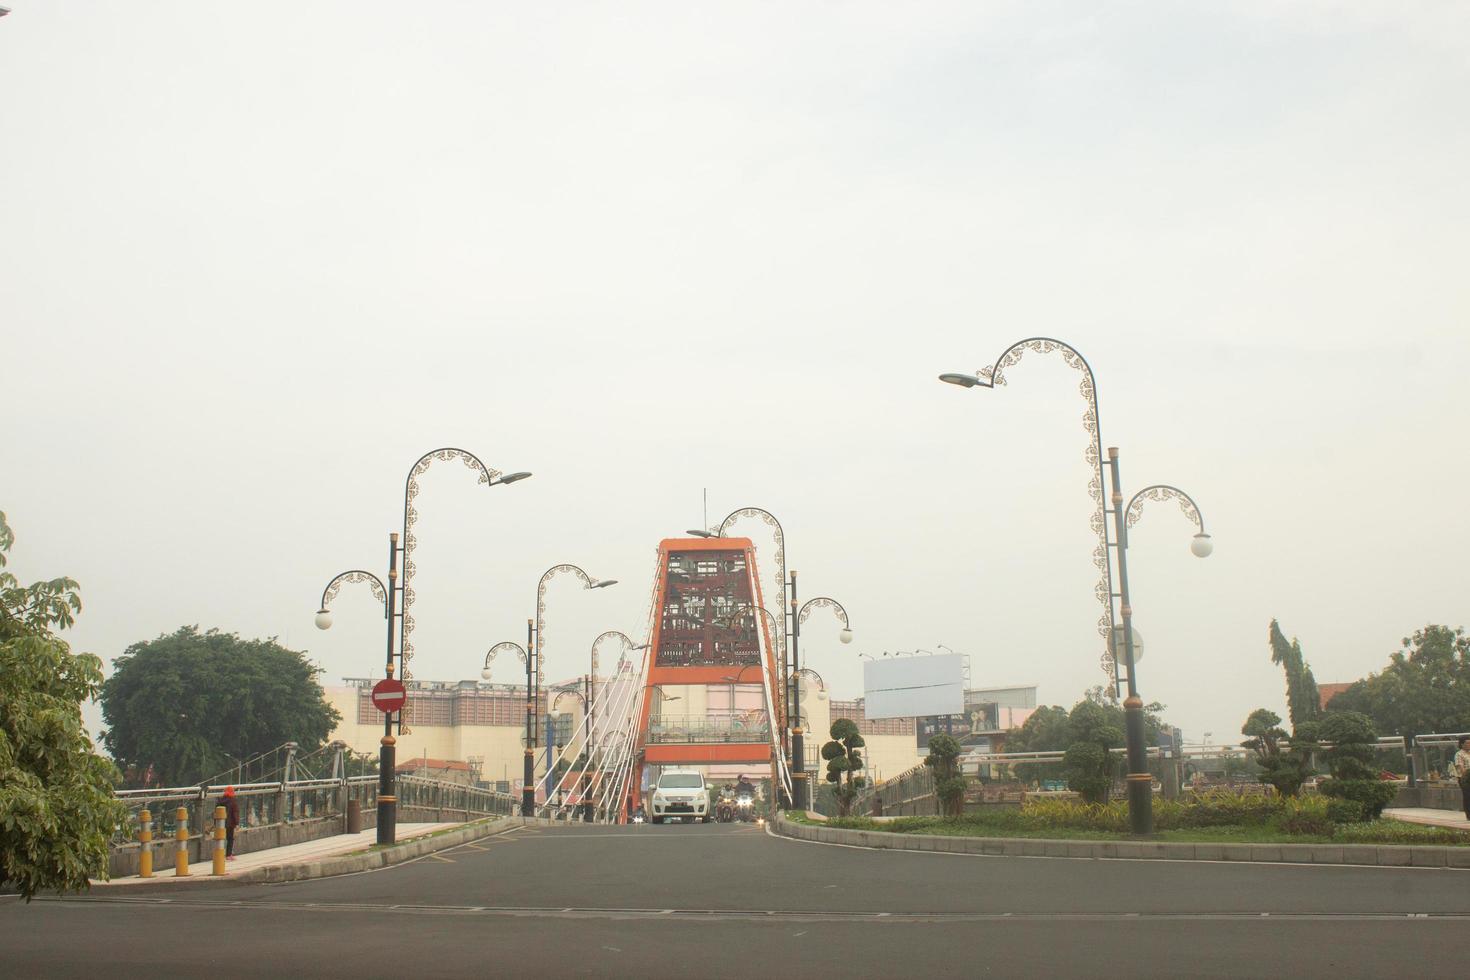 Jembatan Sawunggaling is one of the popular bridges in Surabaya. This bridge connects the frontage road on the west side of Jalan Raya Wonokromo with Jalan Gunungsari photo